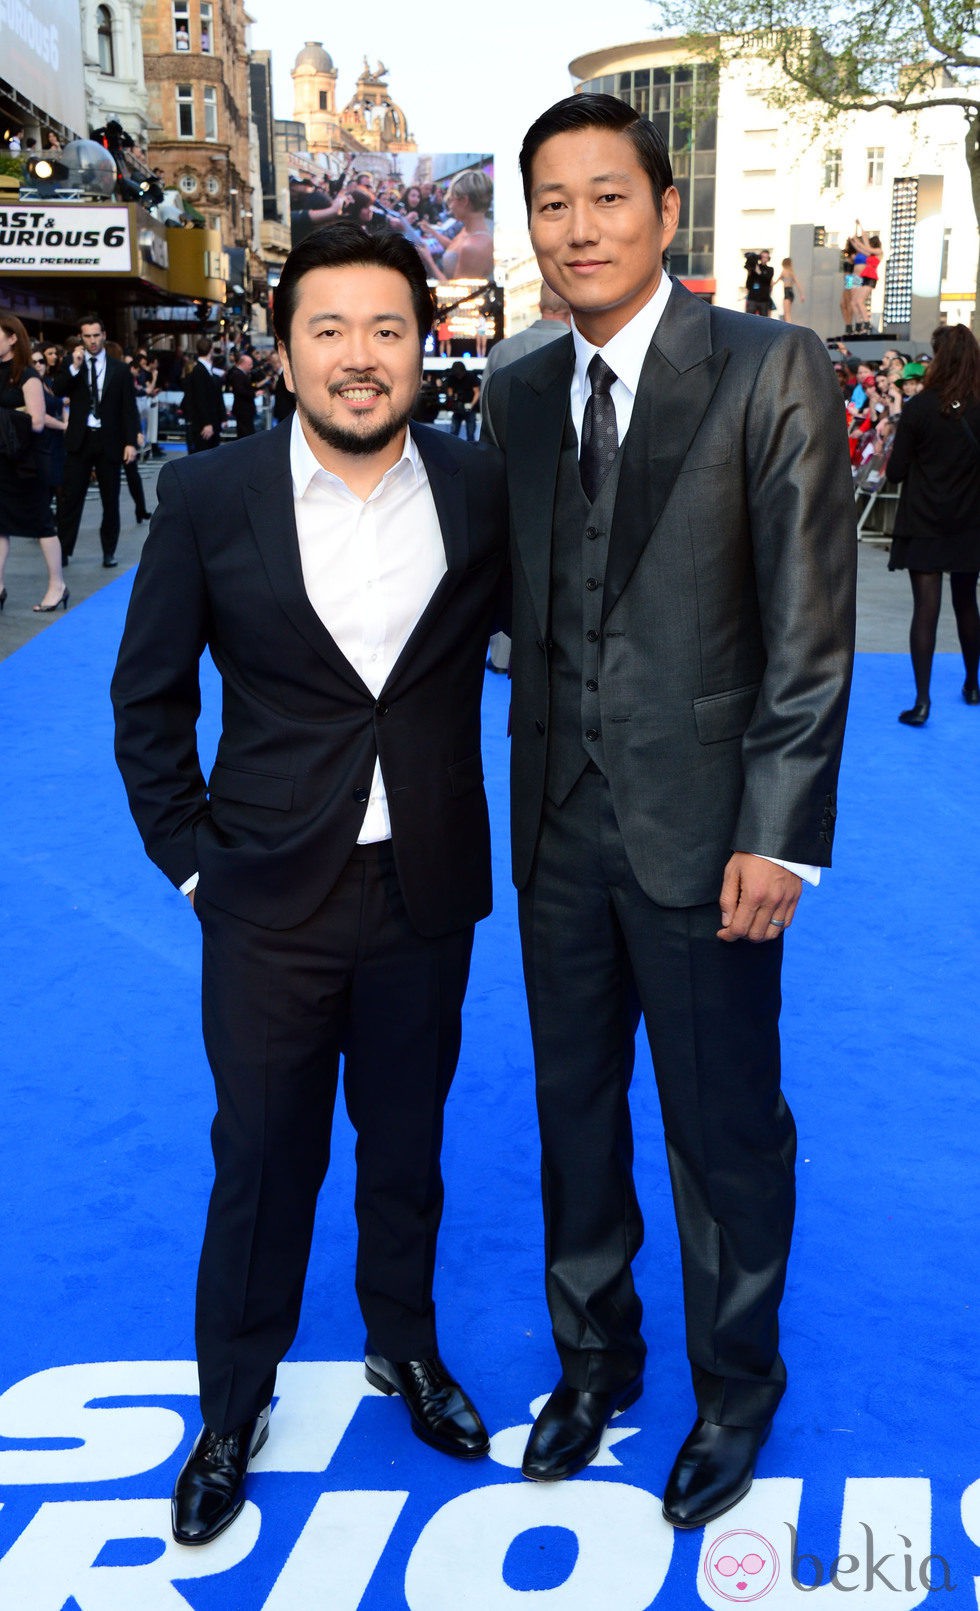 Justin Lin y Ssang Kang en el estreno mundial de 'Fast&Furious 6' en Londres